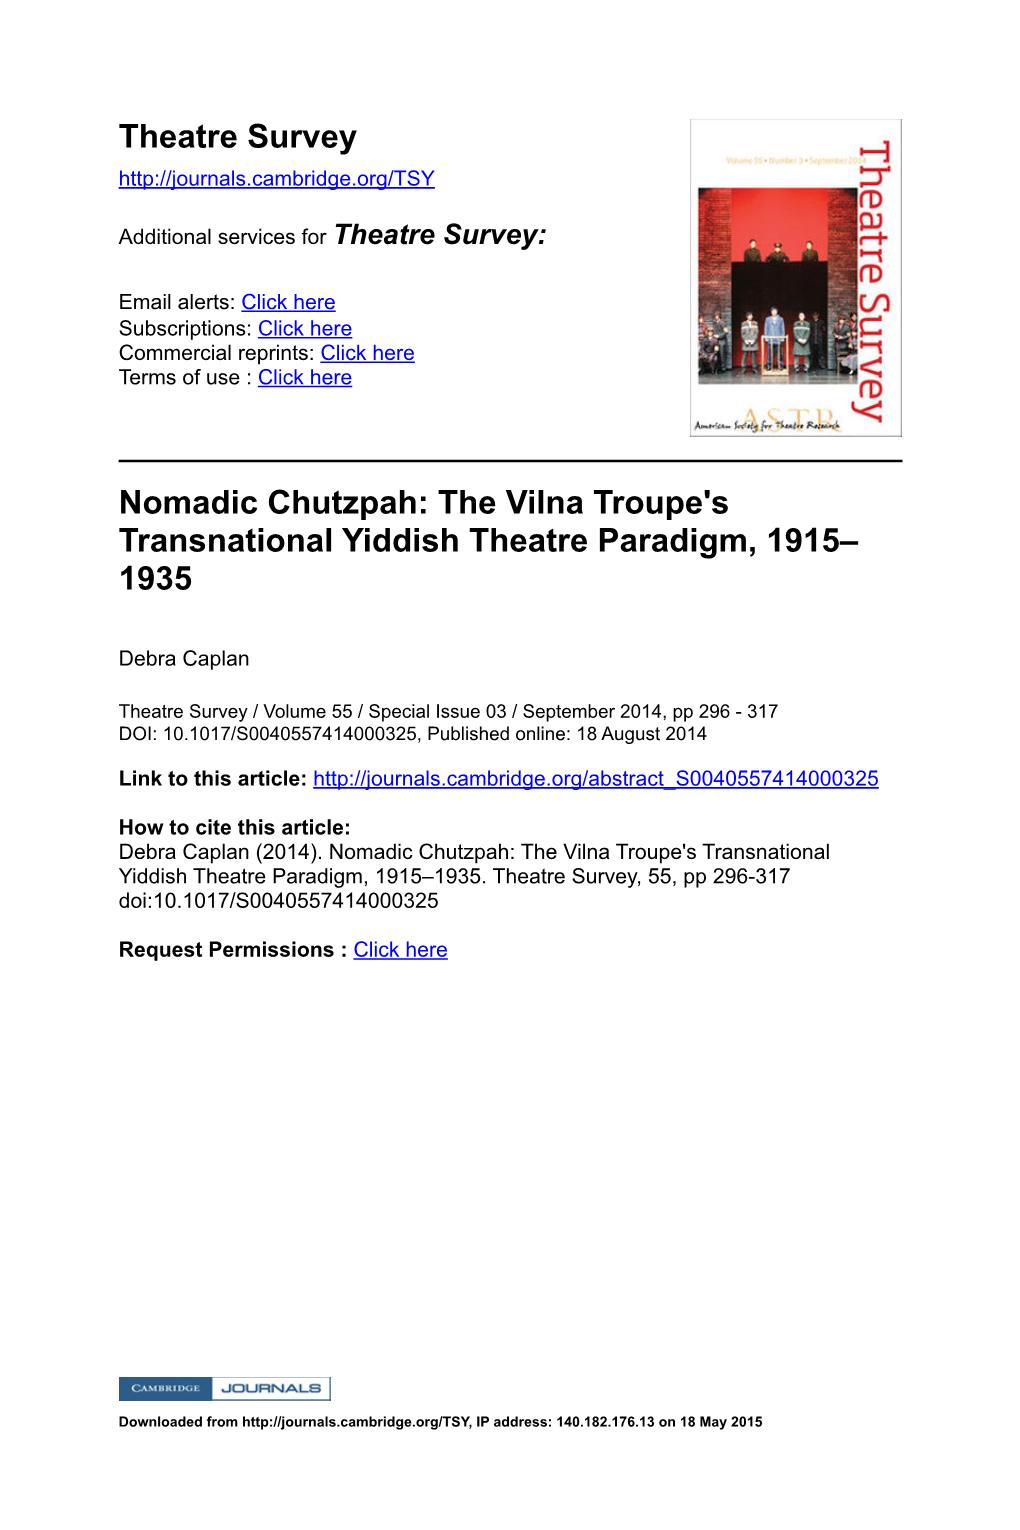 Theatre Survey Nomadic Chutzpah: the Vilna Troupe's Transnational